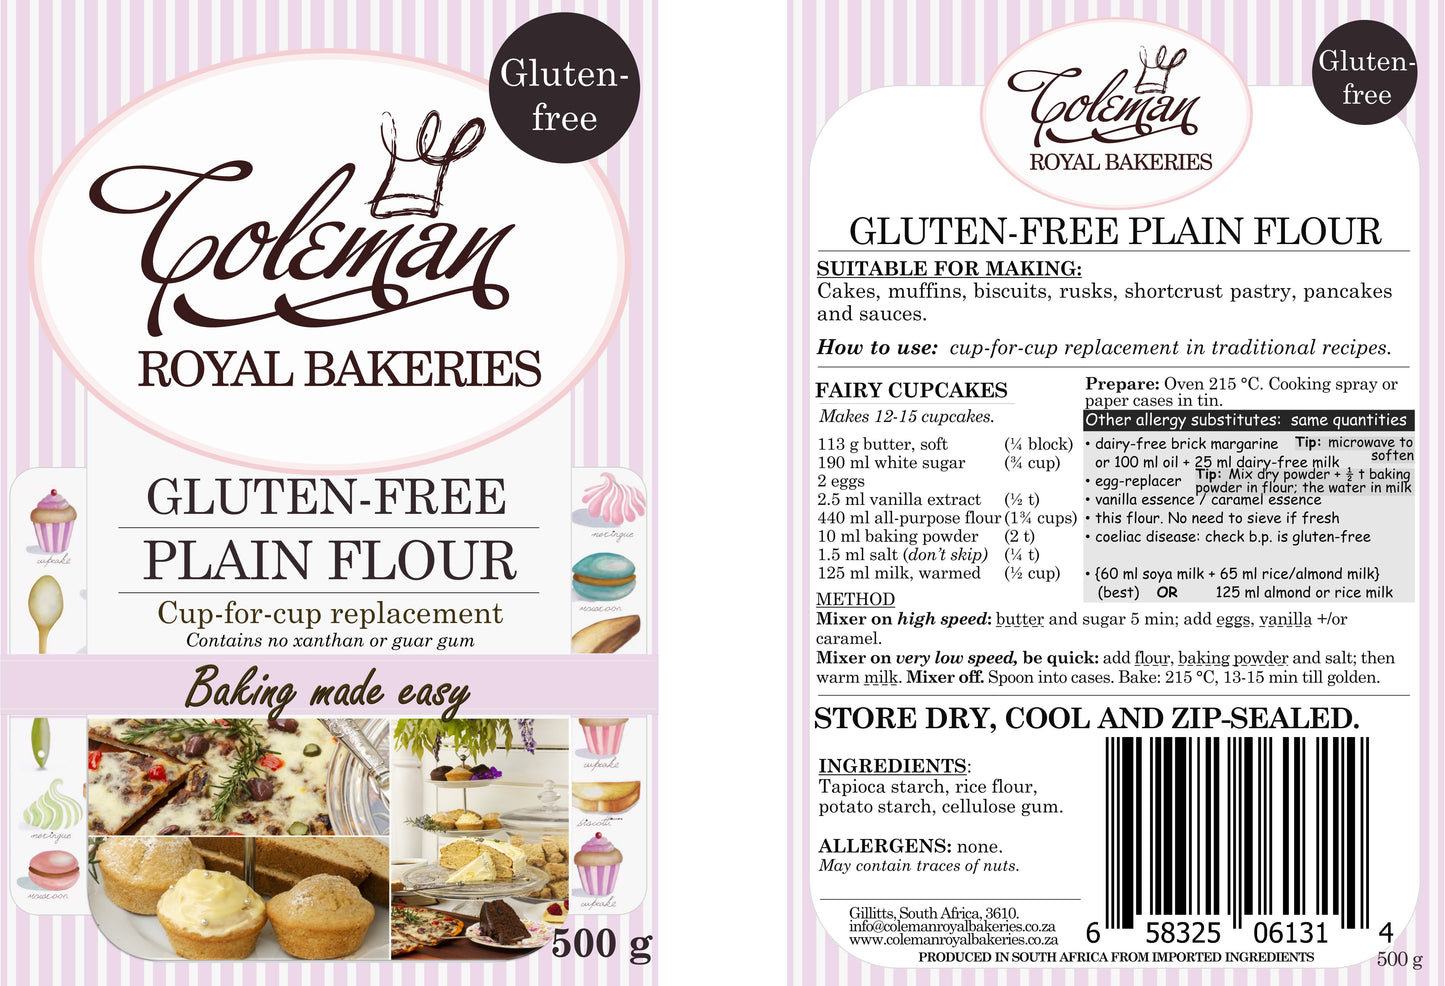 Gluten-free Plain Flour 500 g - Coleman Royal Bakeries